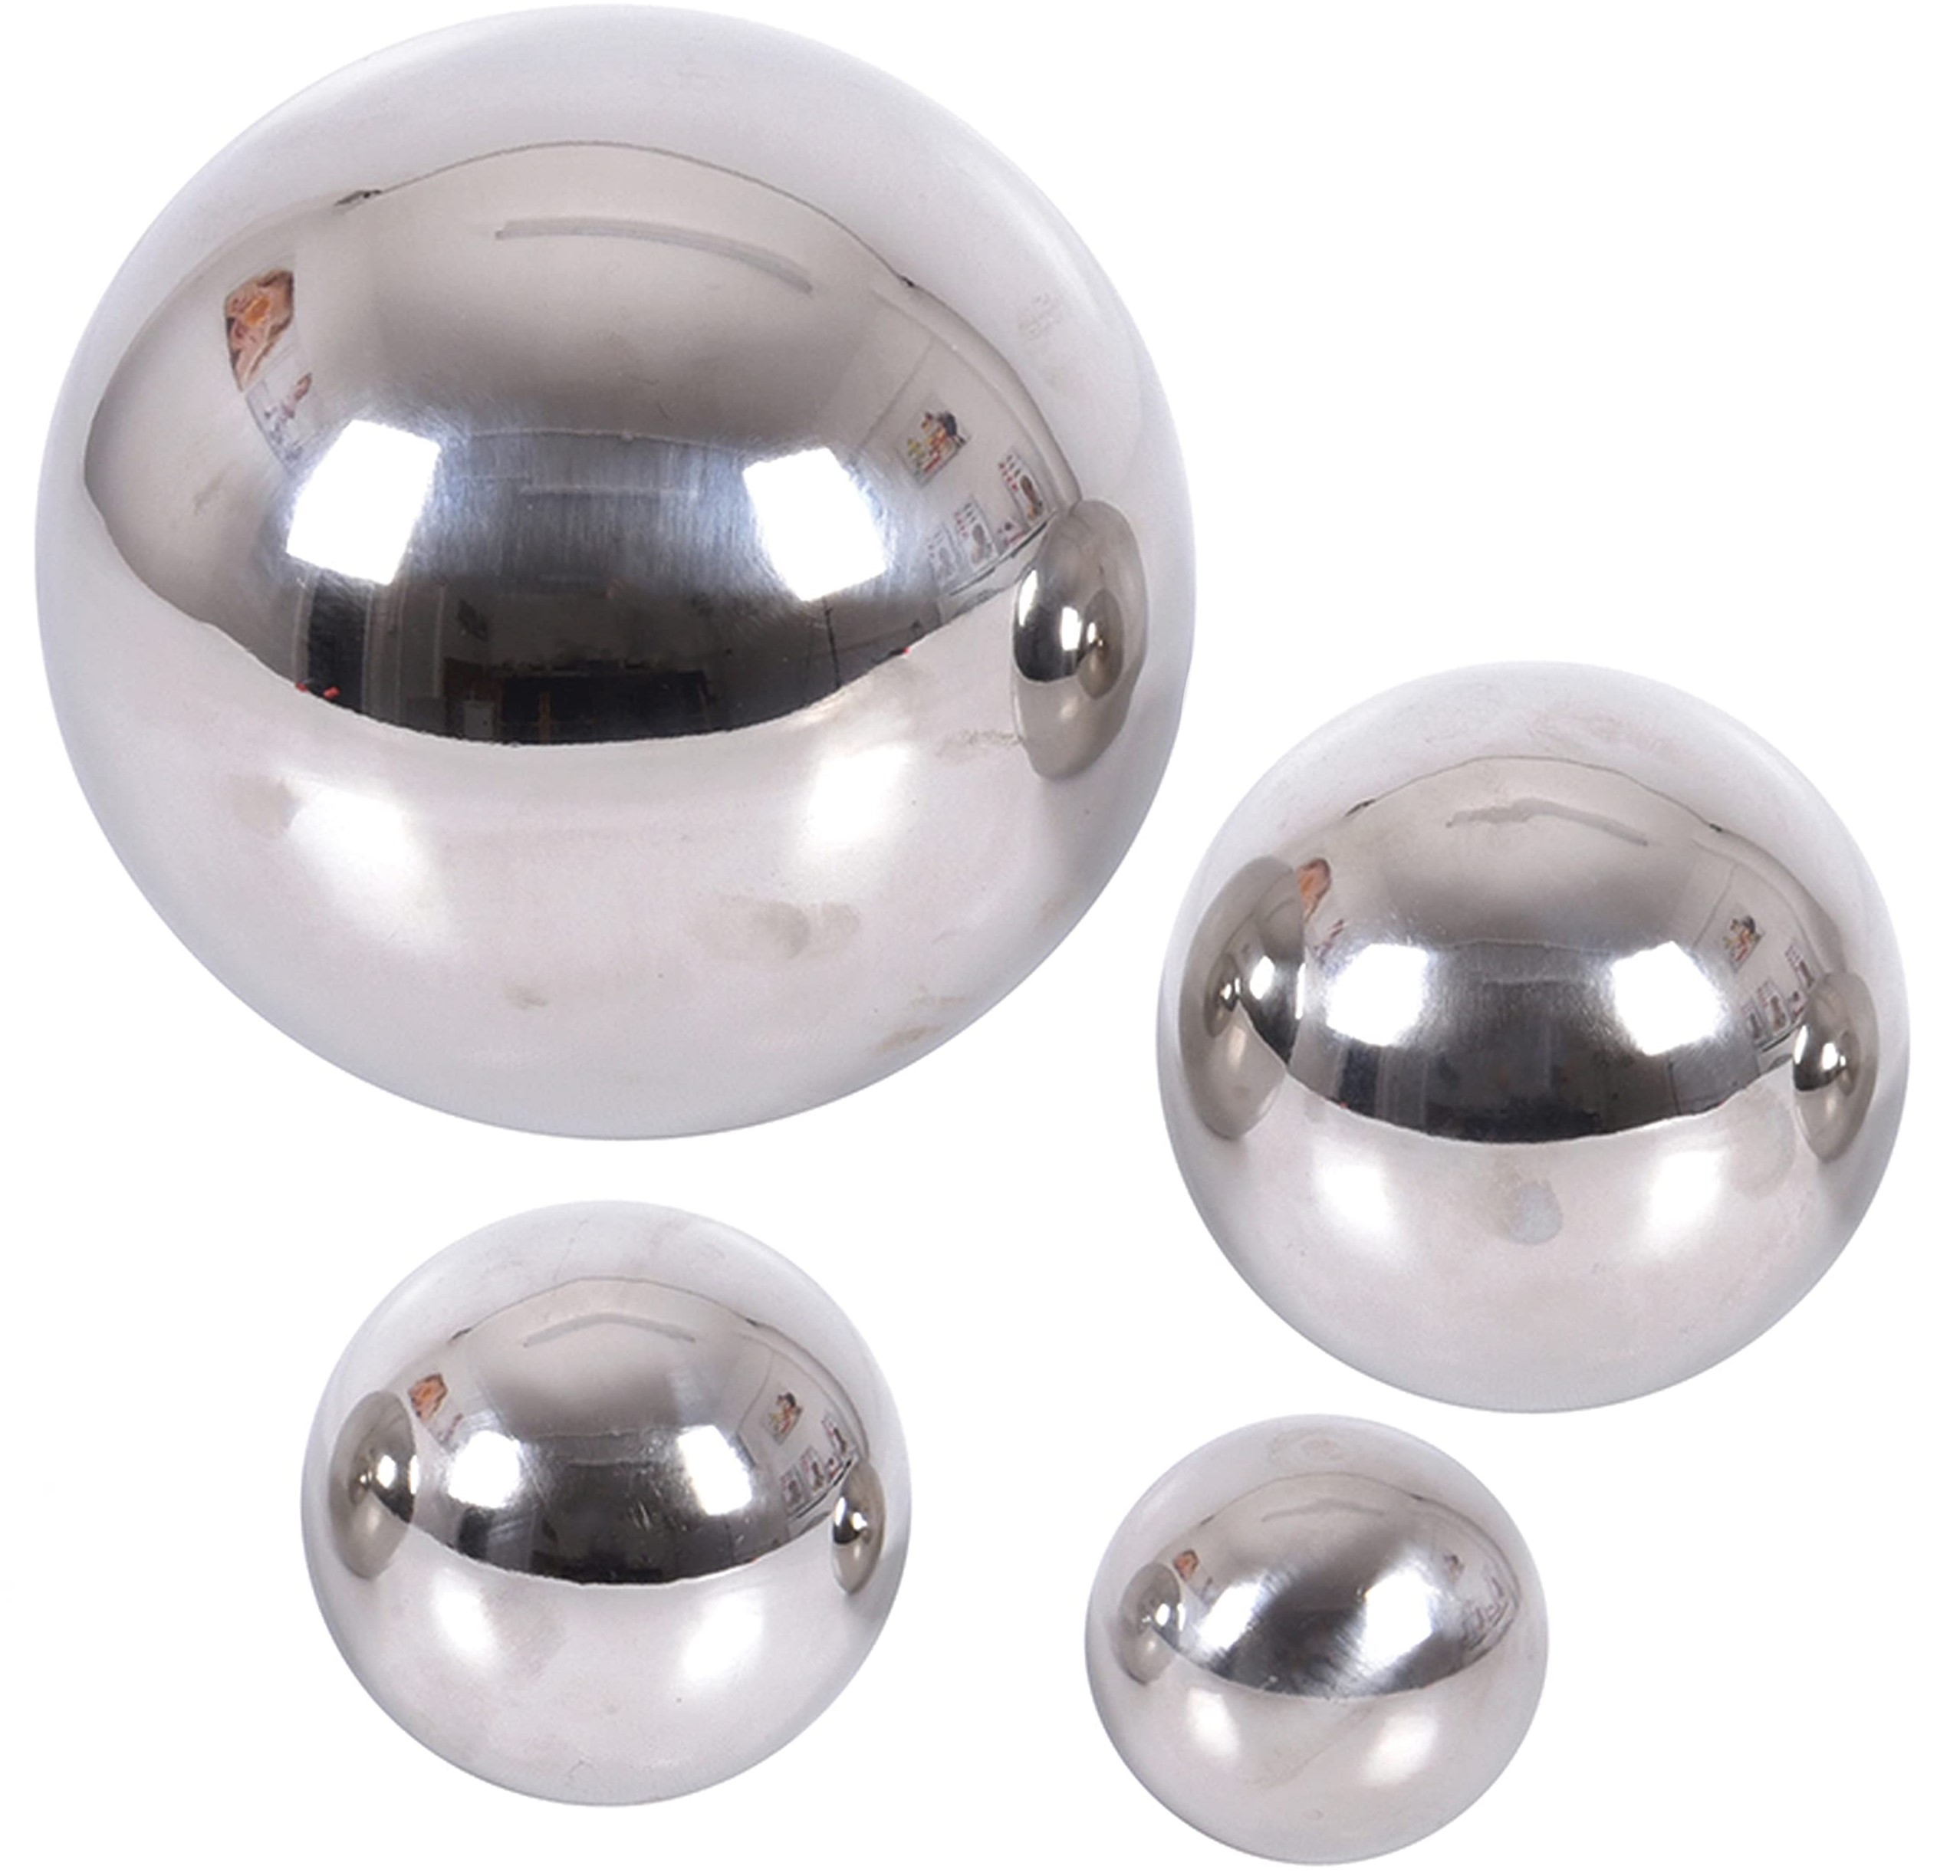 Reflective Balls for autistic children